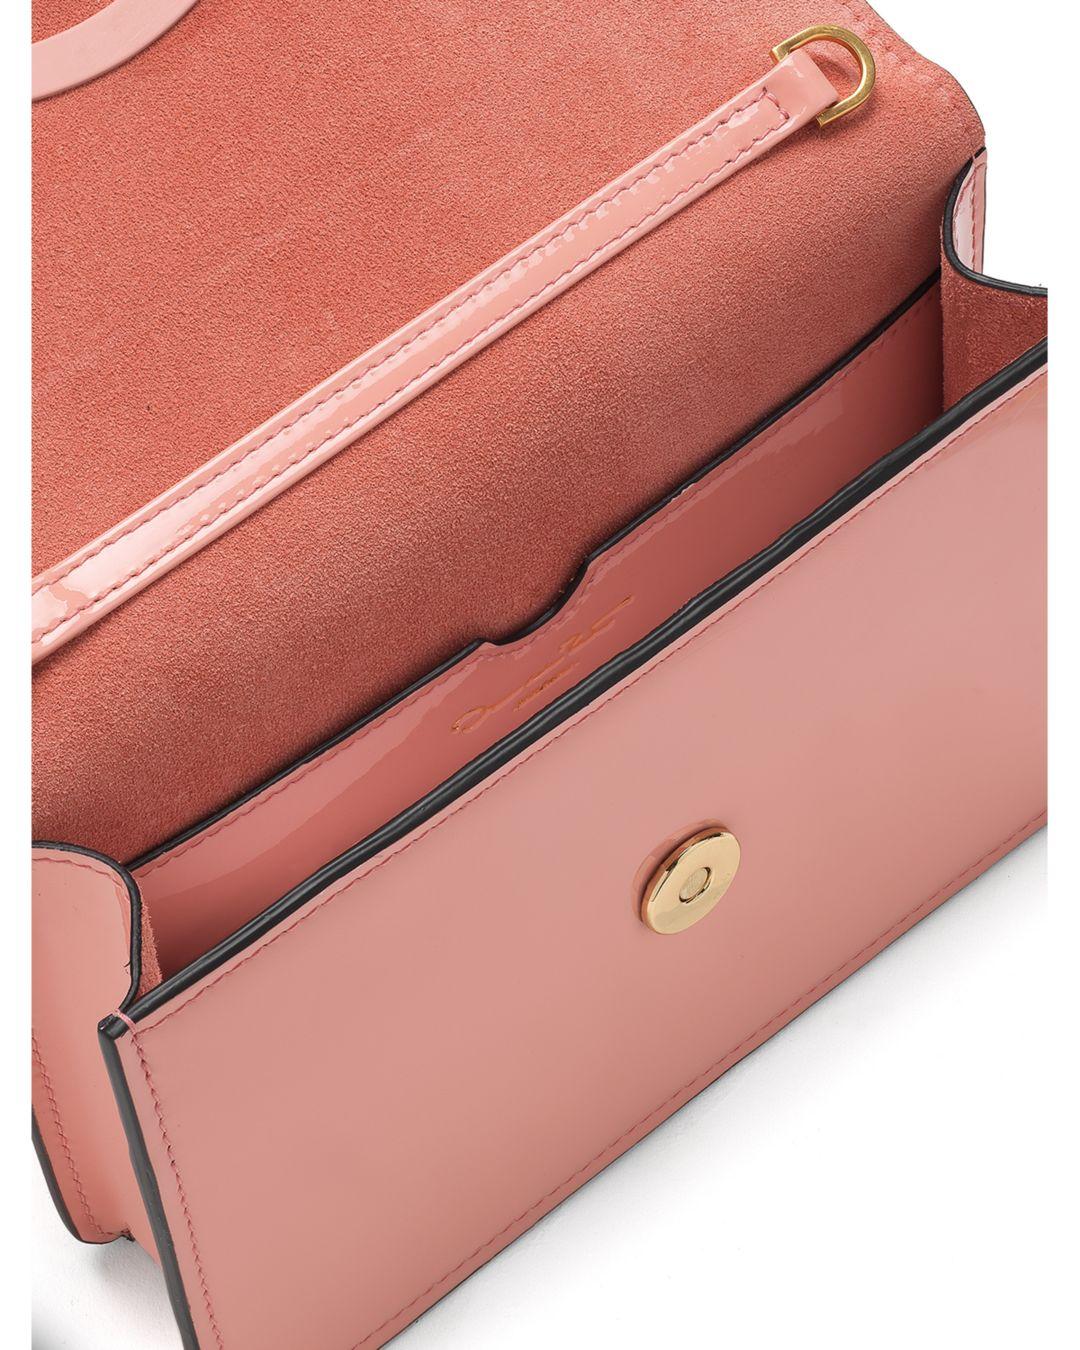 Prada Saffiano Mini Crossbody Clutch Pink, $1,390, Neiman Marcus